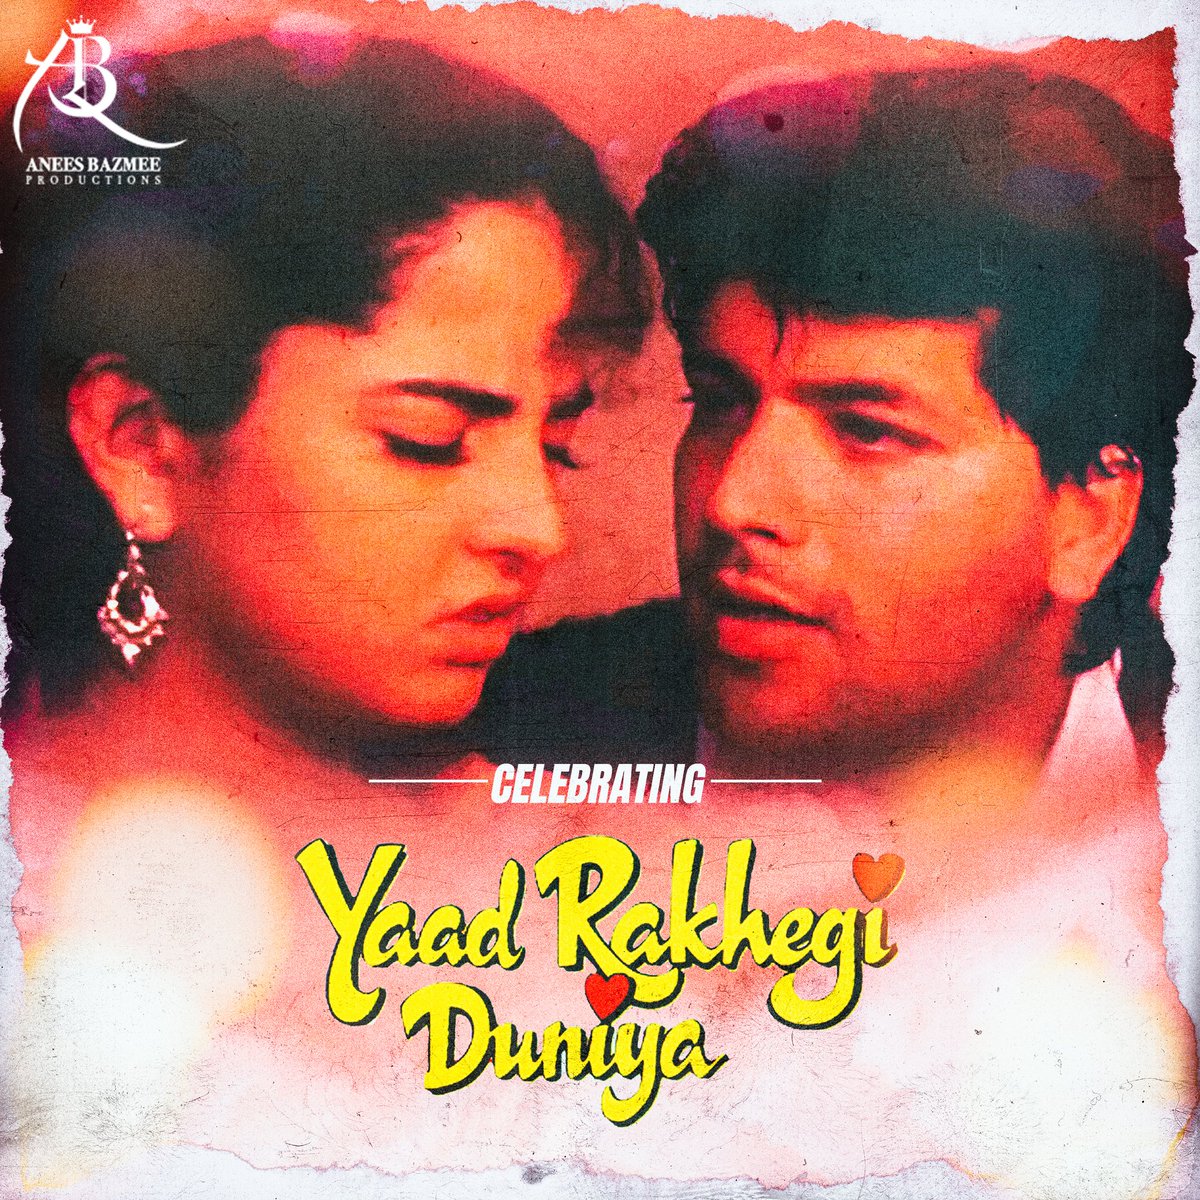 Celebrating 29 years of the romantic drama, #YaadRakhegiDuniya!
#29YearsOfYaadRakhegiDuniya

#AneesBazmeeProductions #AdityaPancholi #RukhsarRehman #Bollywood #Romantic #Drama #BollywoodMovie